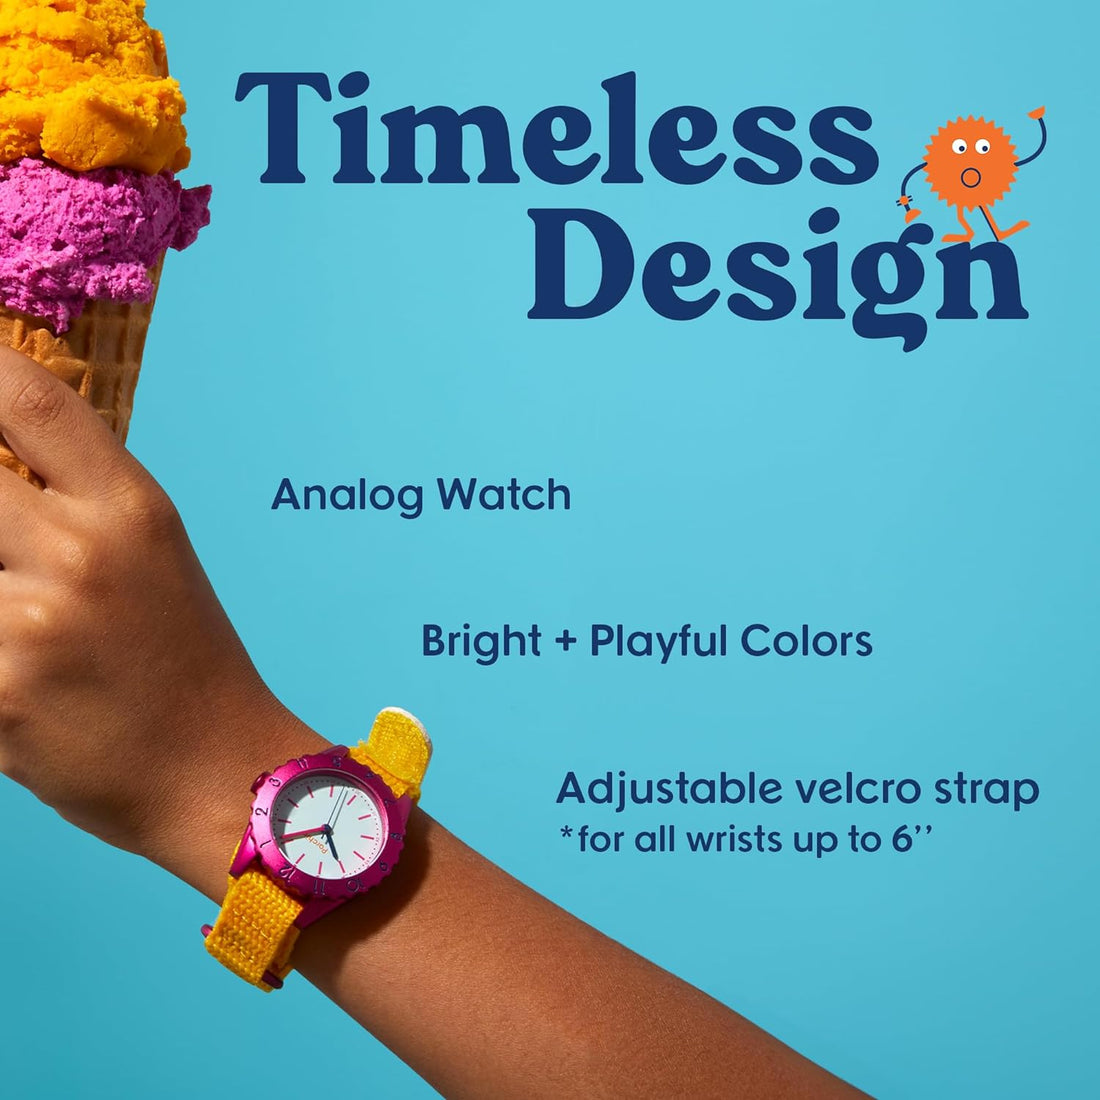 Parchie Wrist Watch - Analog Watch for Kids, Adjustable Nylon Strap